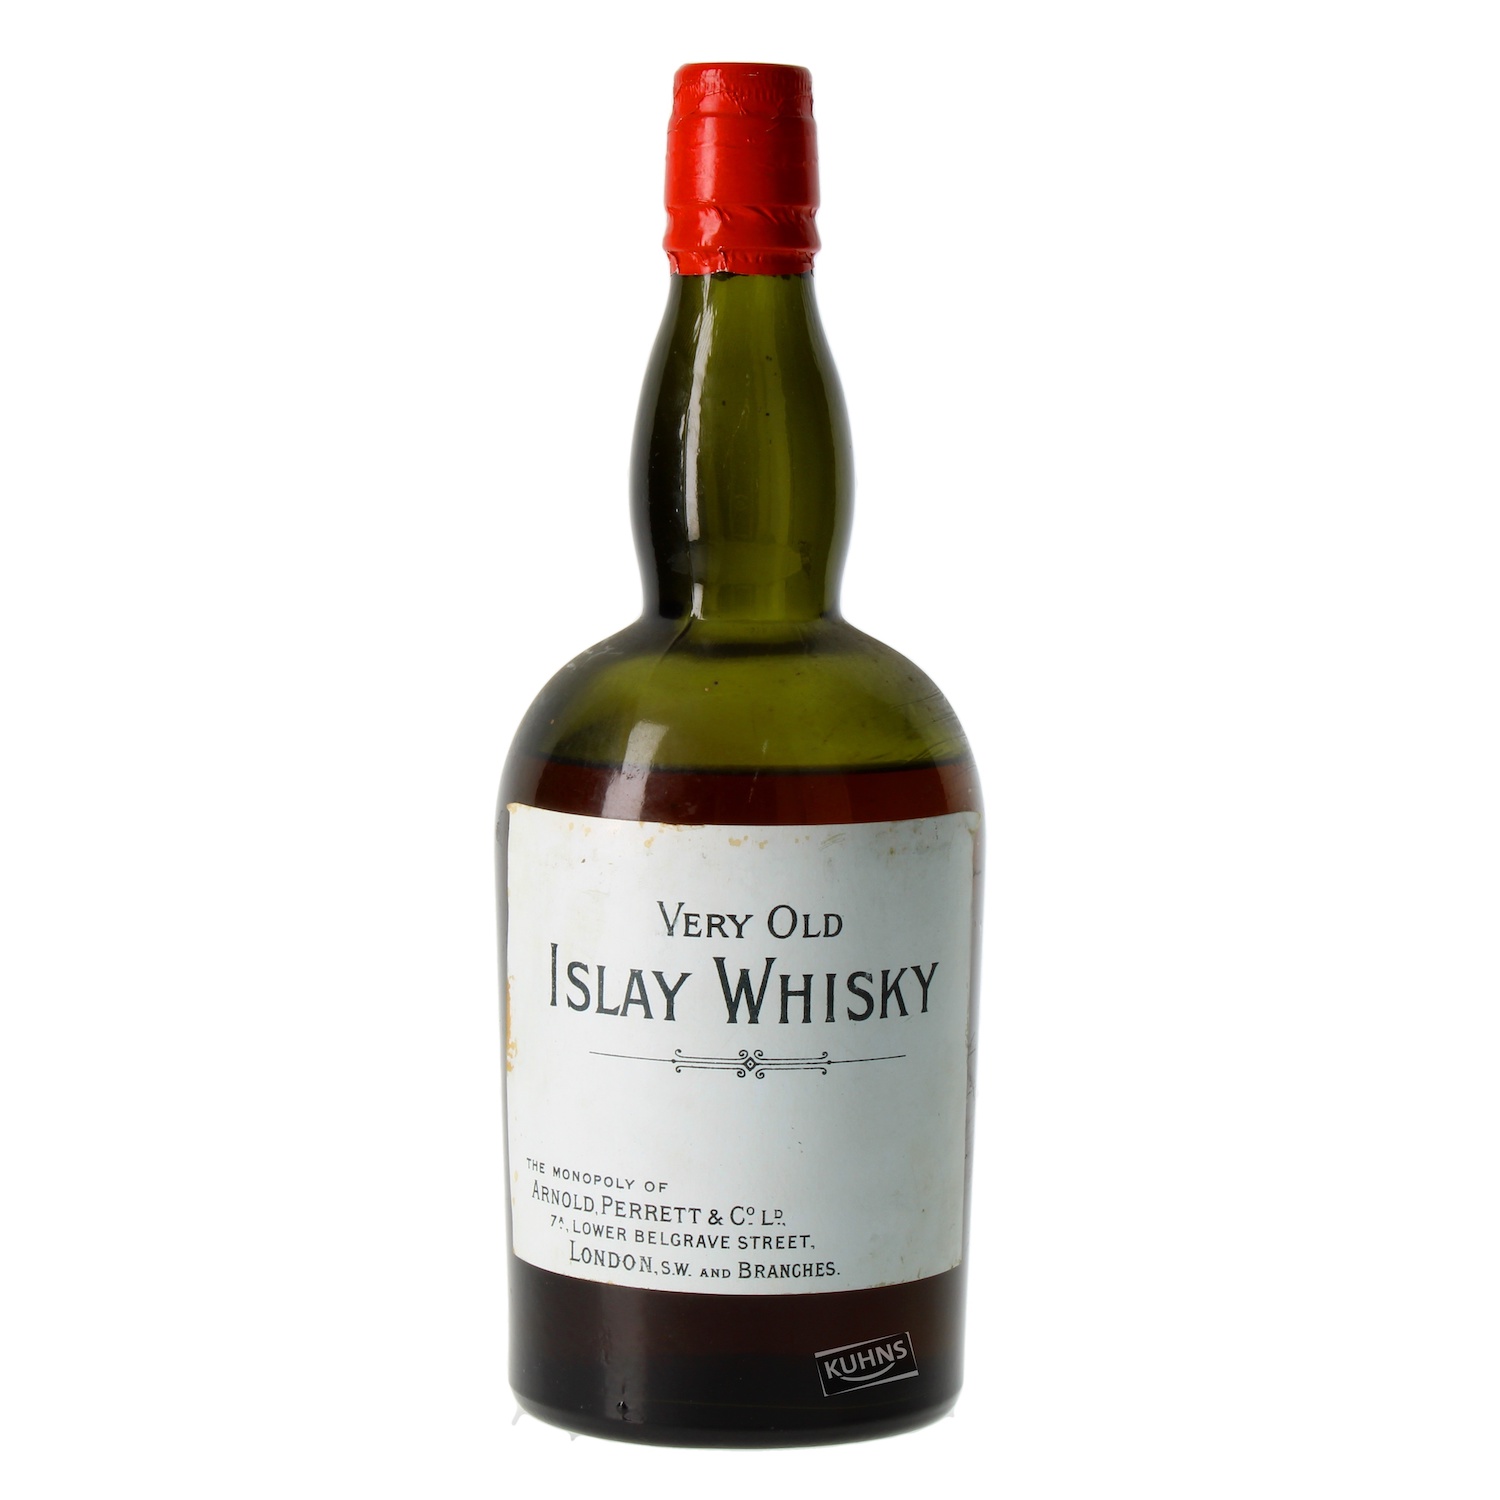 Very old Islay Whisky